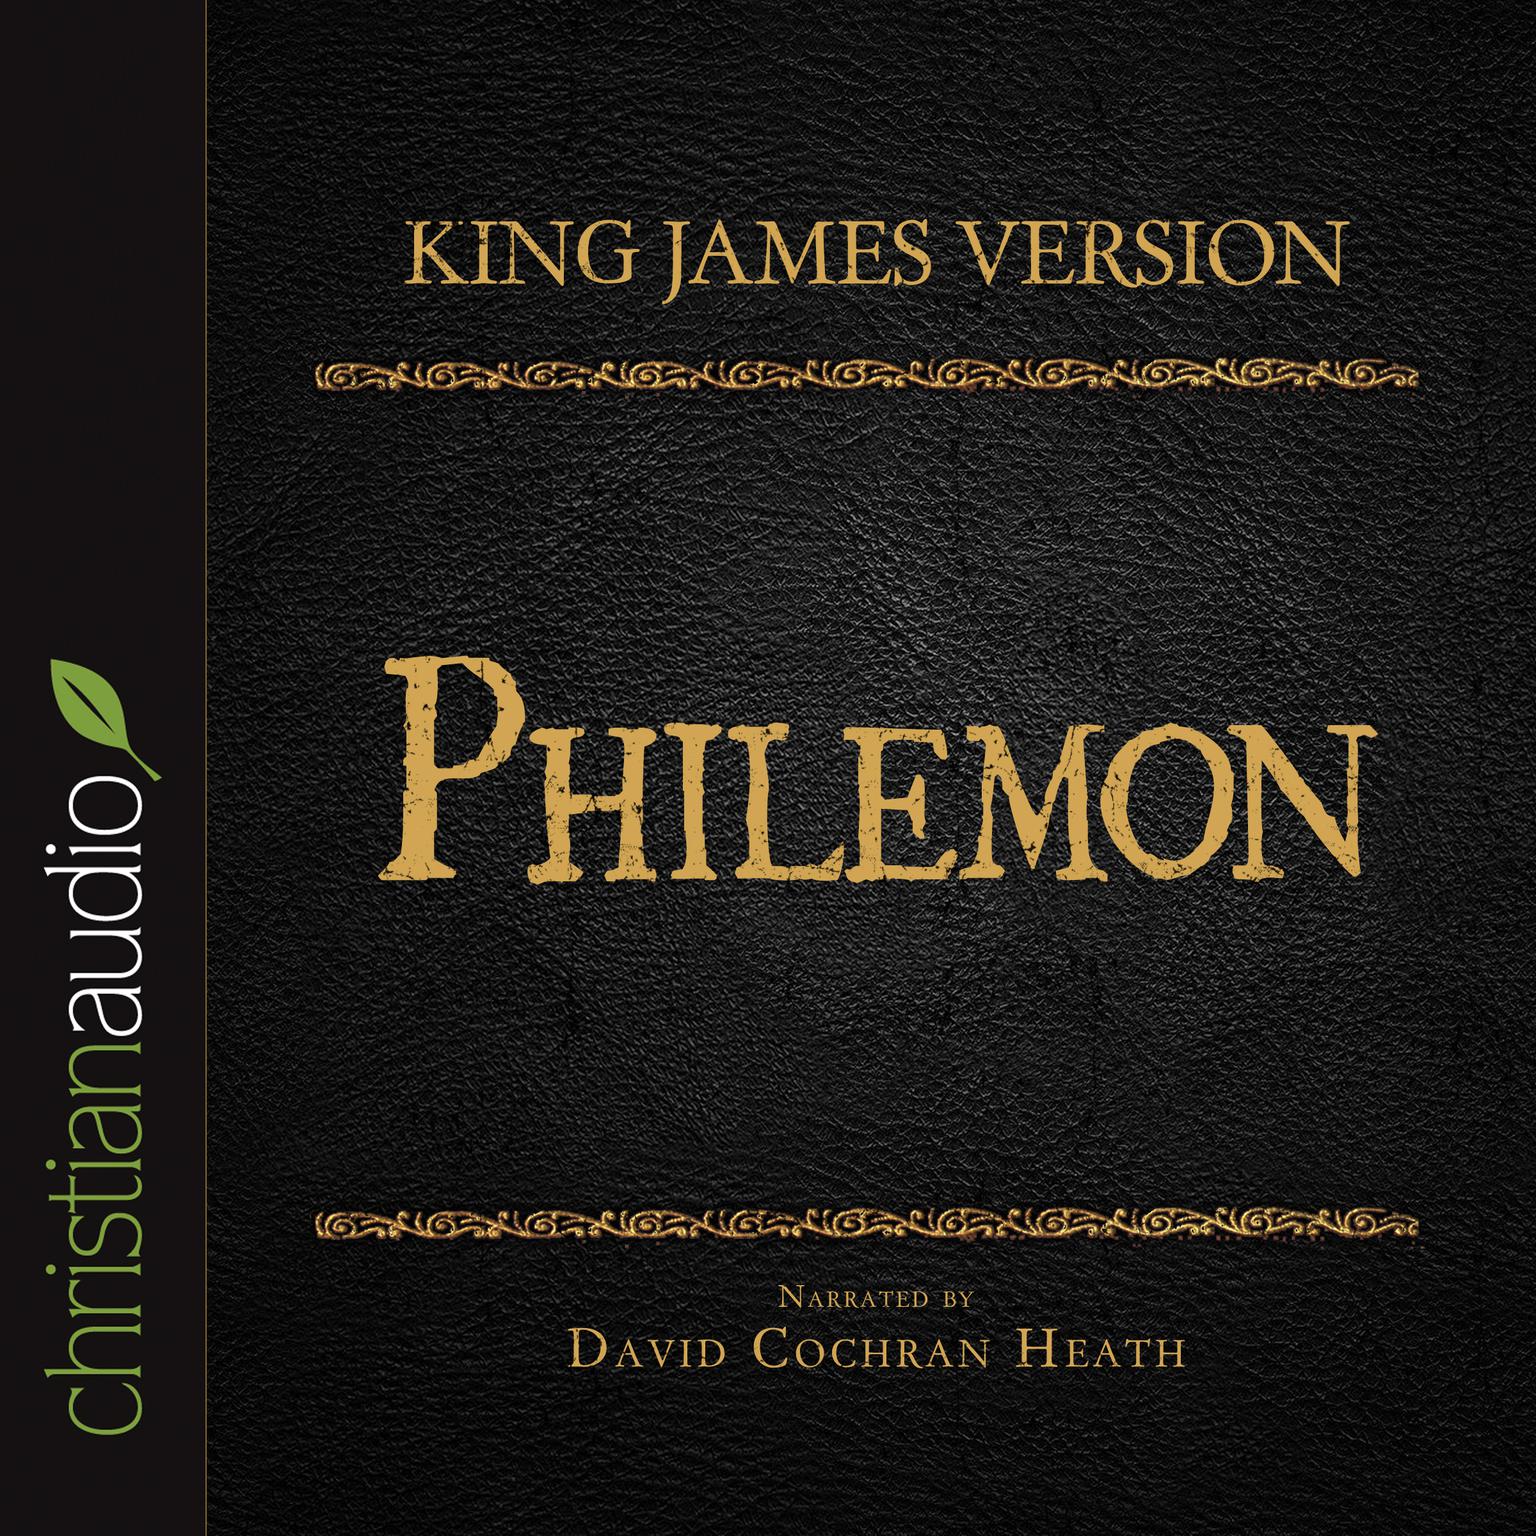 Holy Bible in Audio - King James Version: Philemon Audiobook, by David Cochran Heath